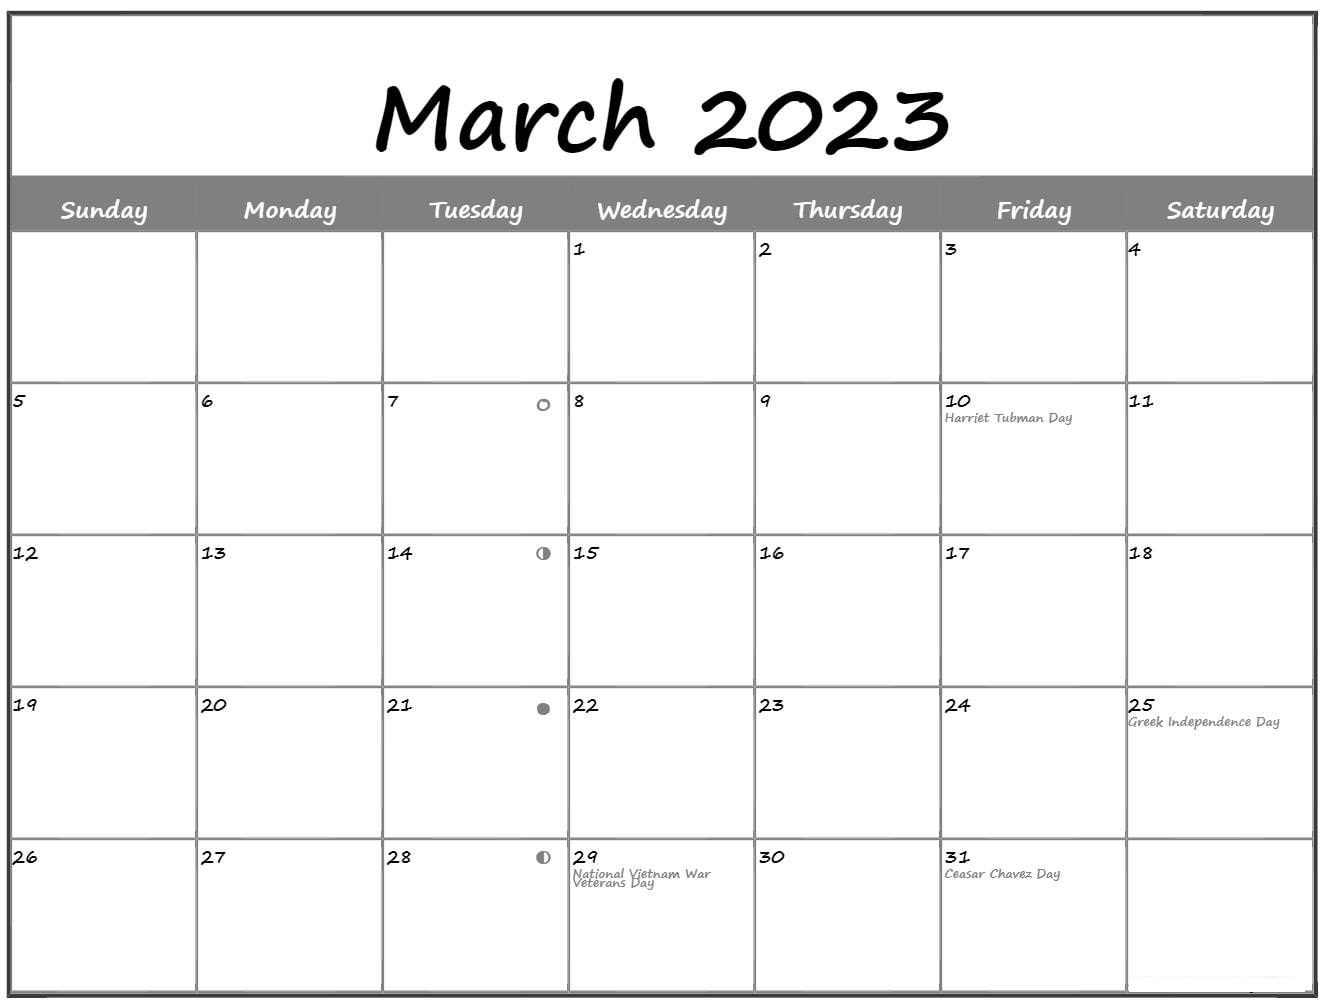 March 2023 calendar moon